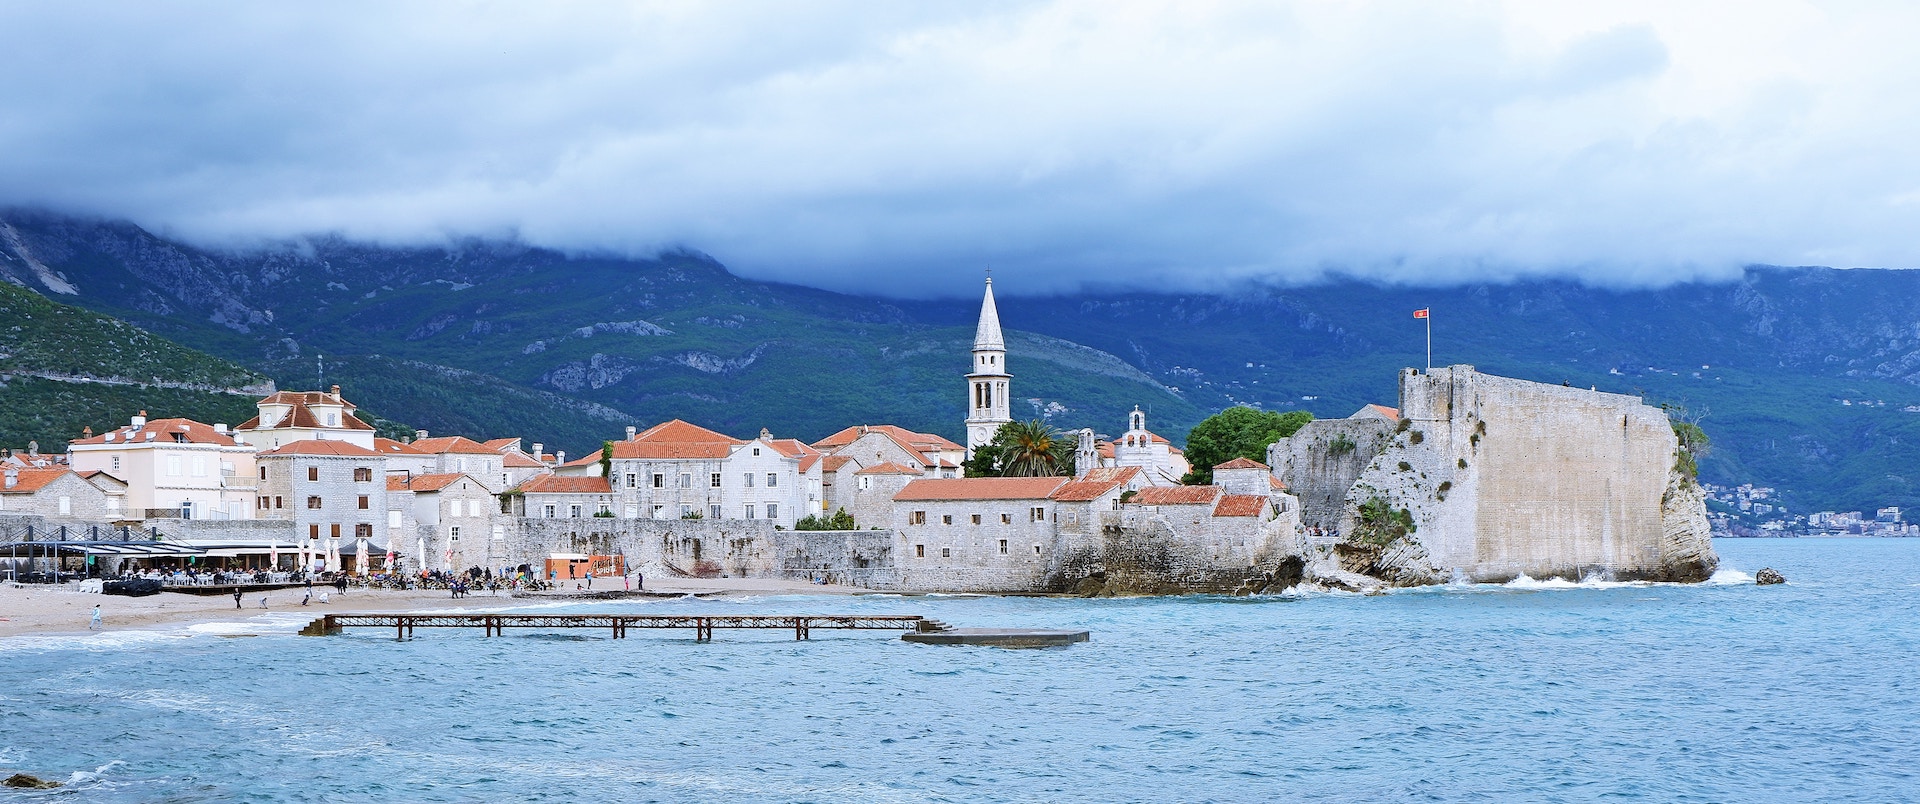 Montenegro photo by Andrew Buchanan